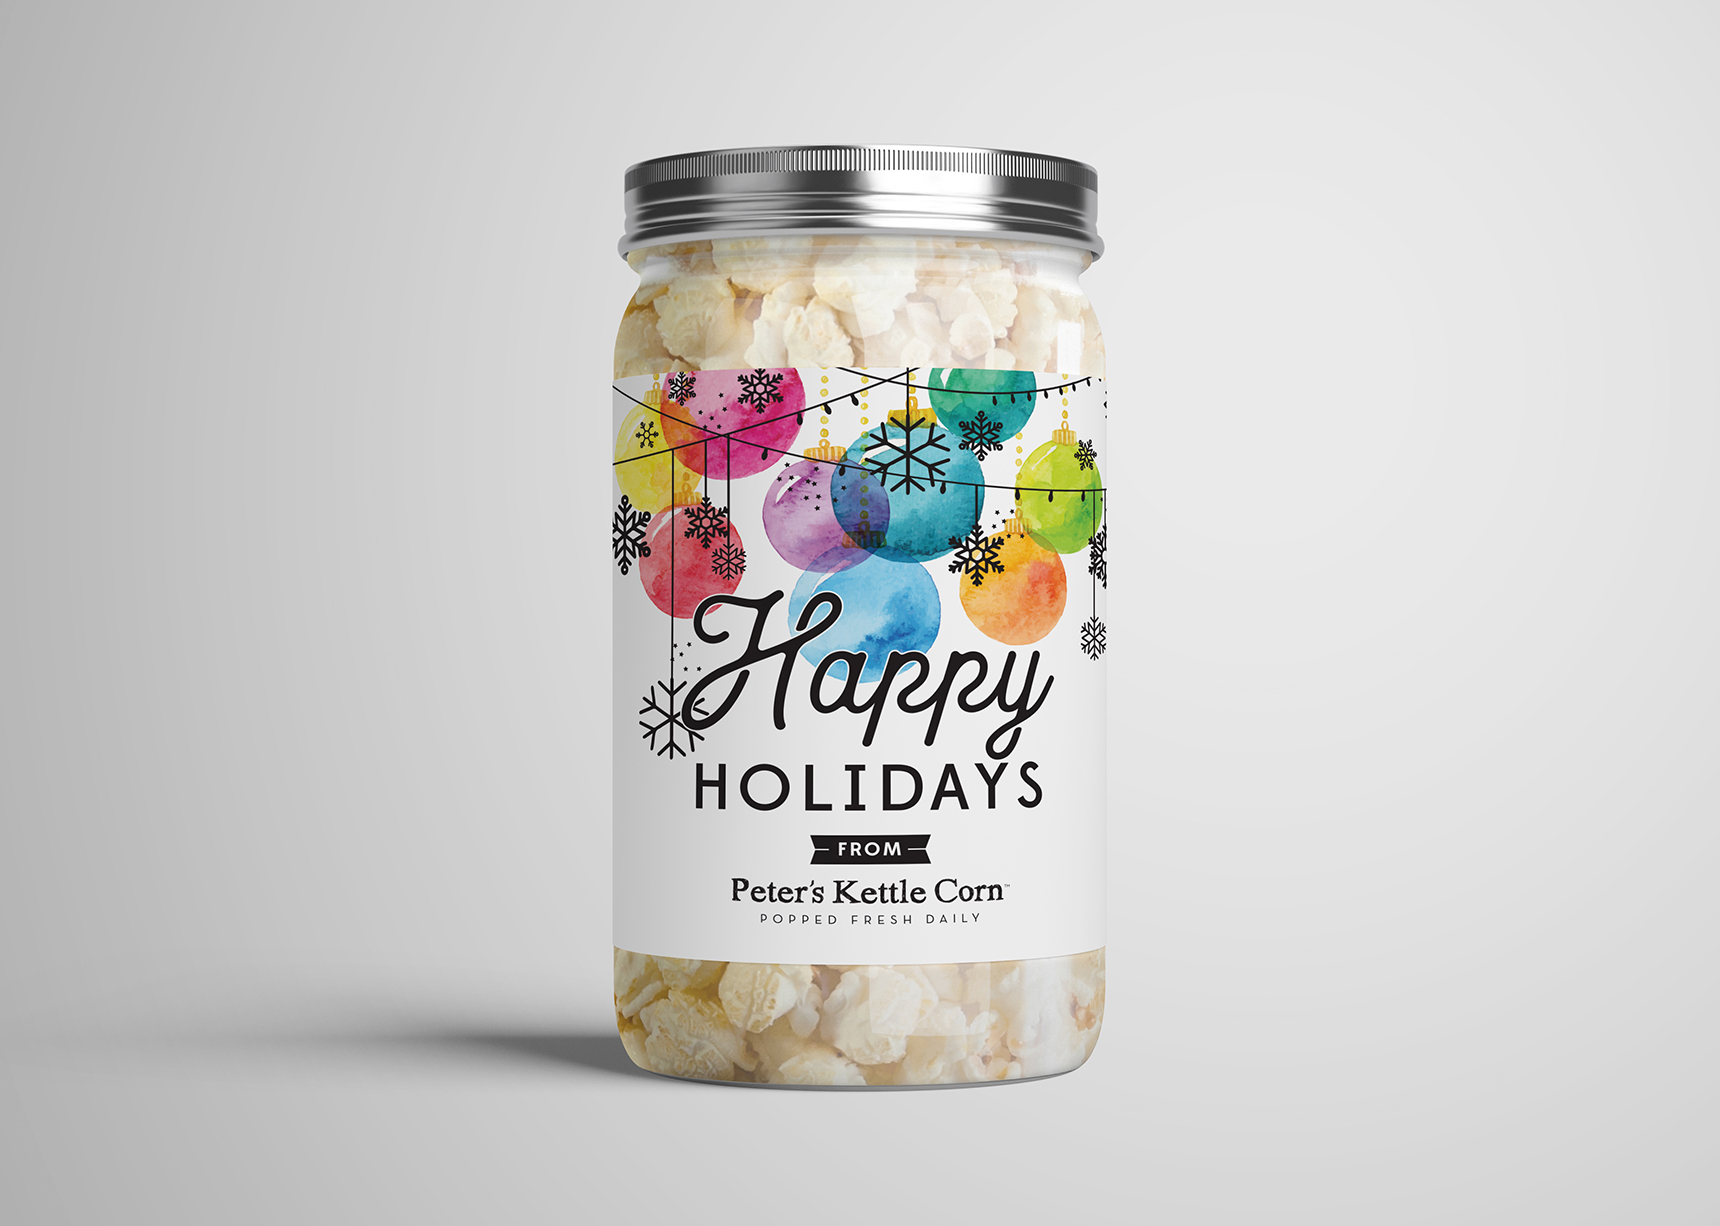 pkc holiday jar design